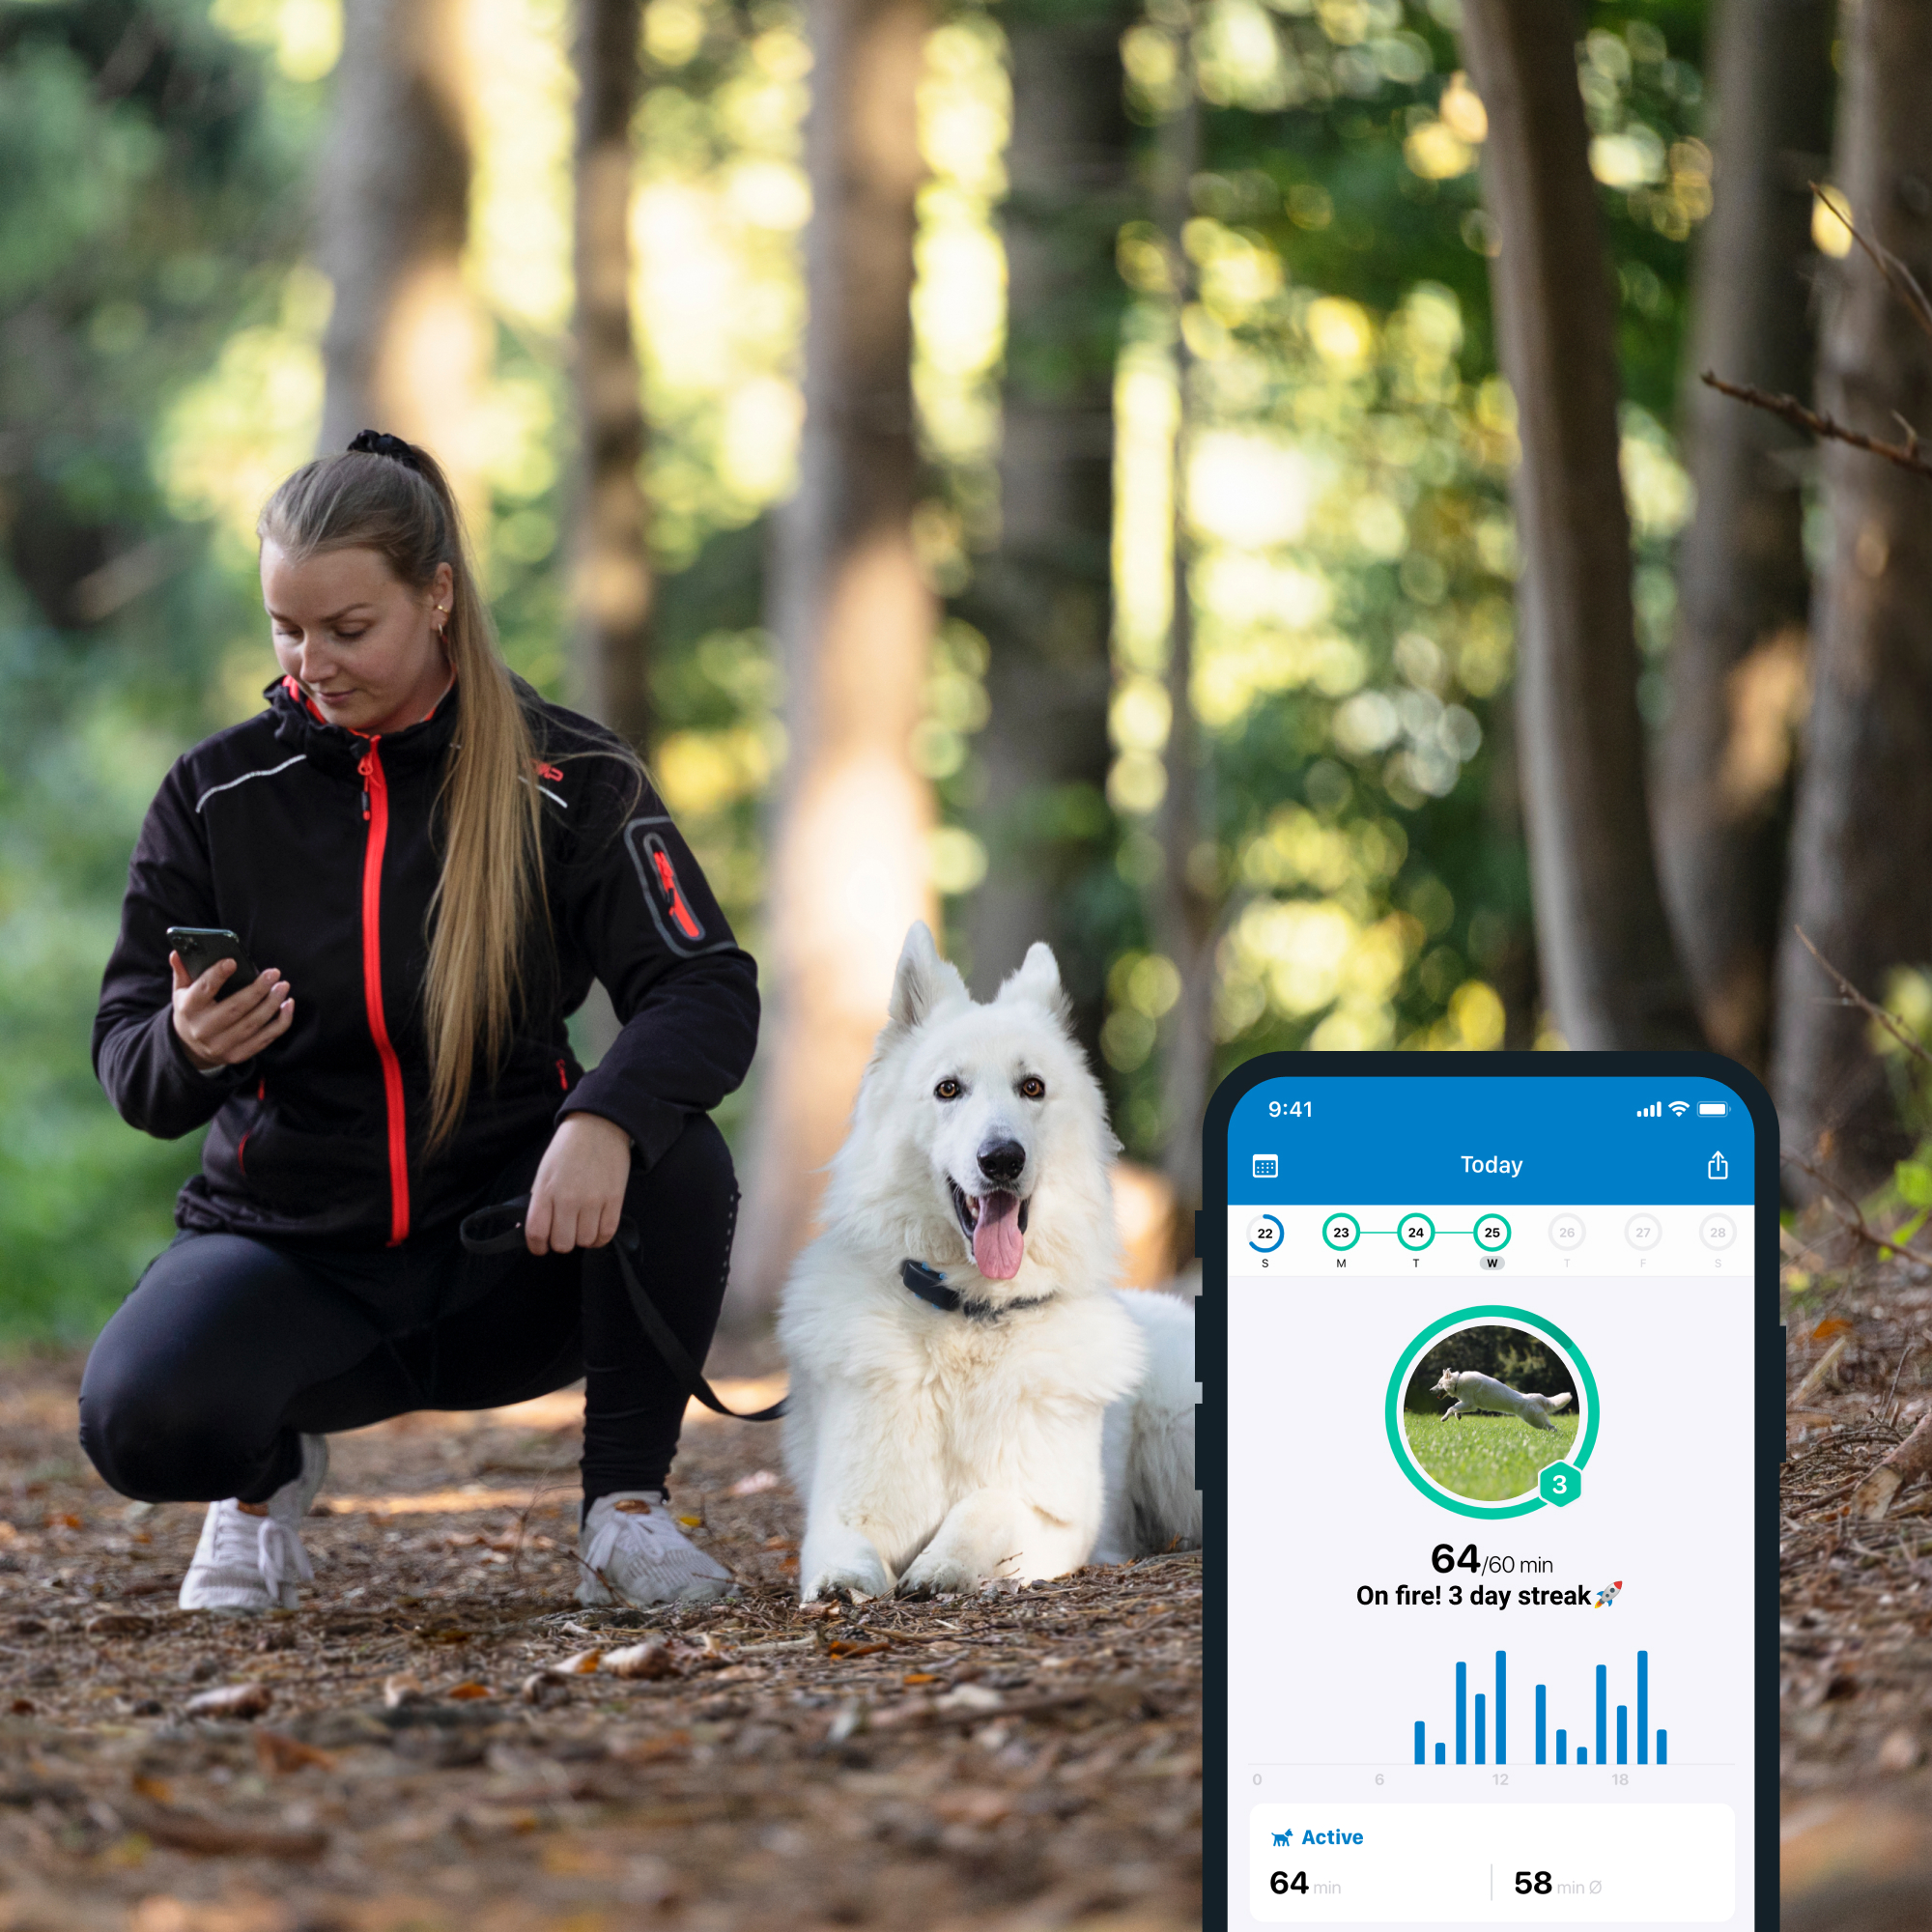 Hunde TRACTIVE 4. (Blau) Tracker Tracker GPS für DOG GPS